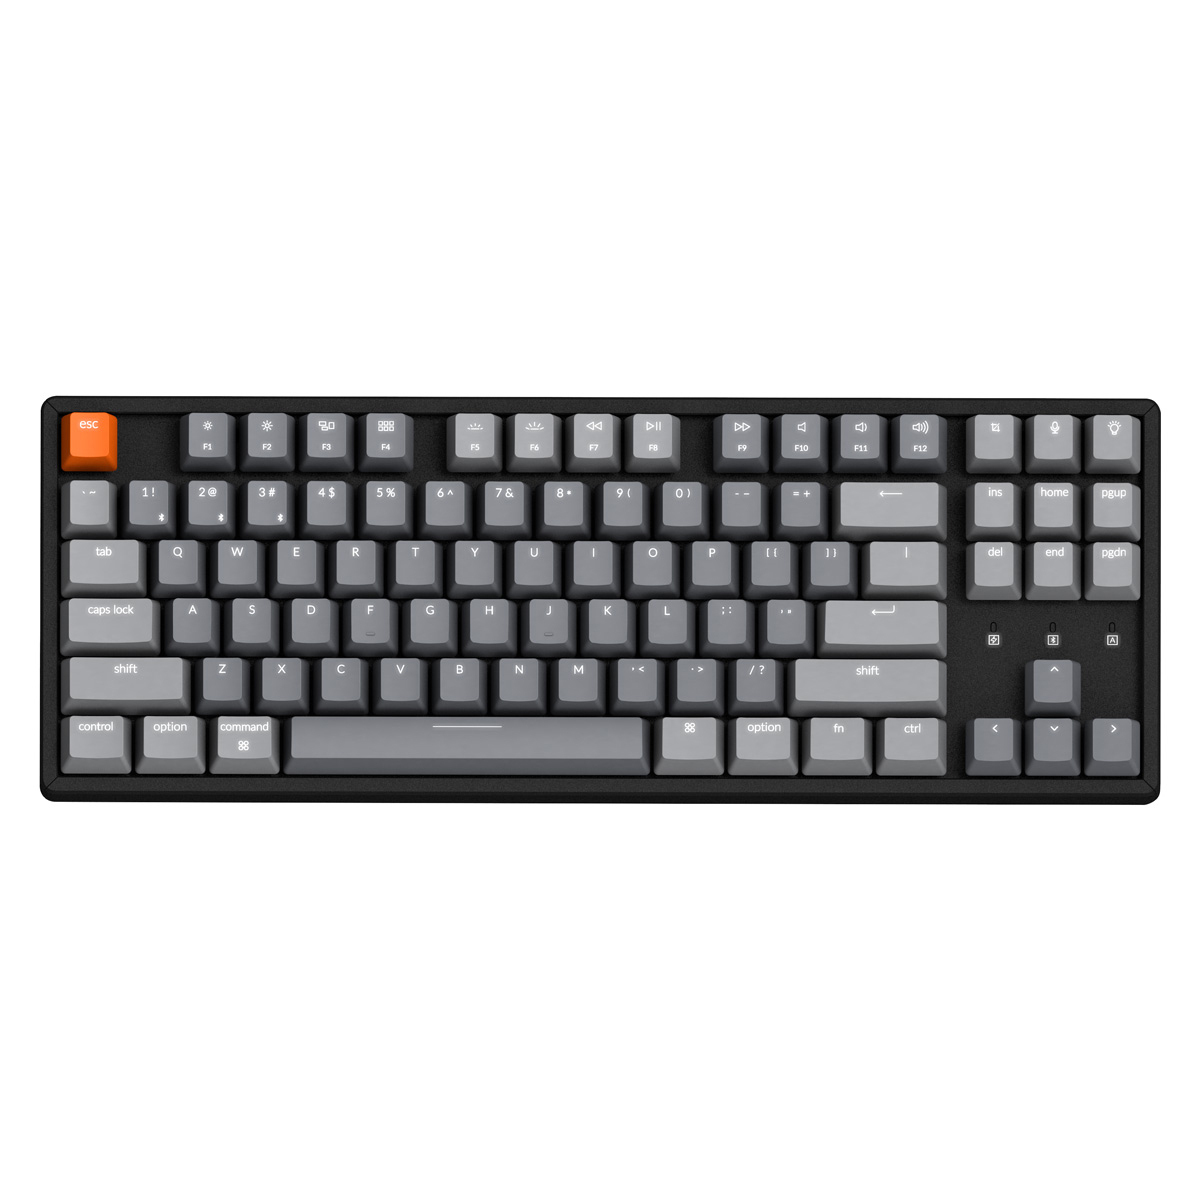 Bàn phím - Keyboard Keychron K8 RGB